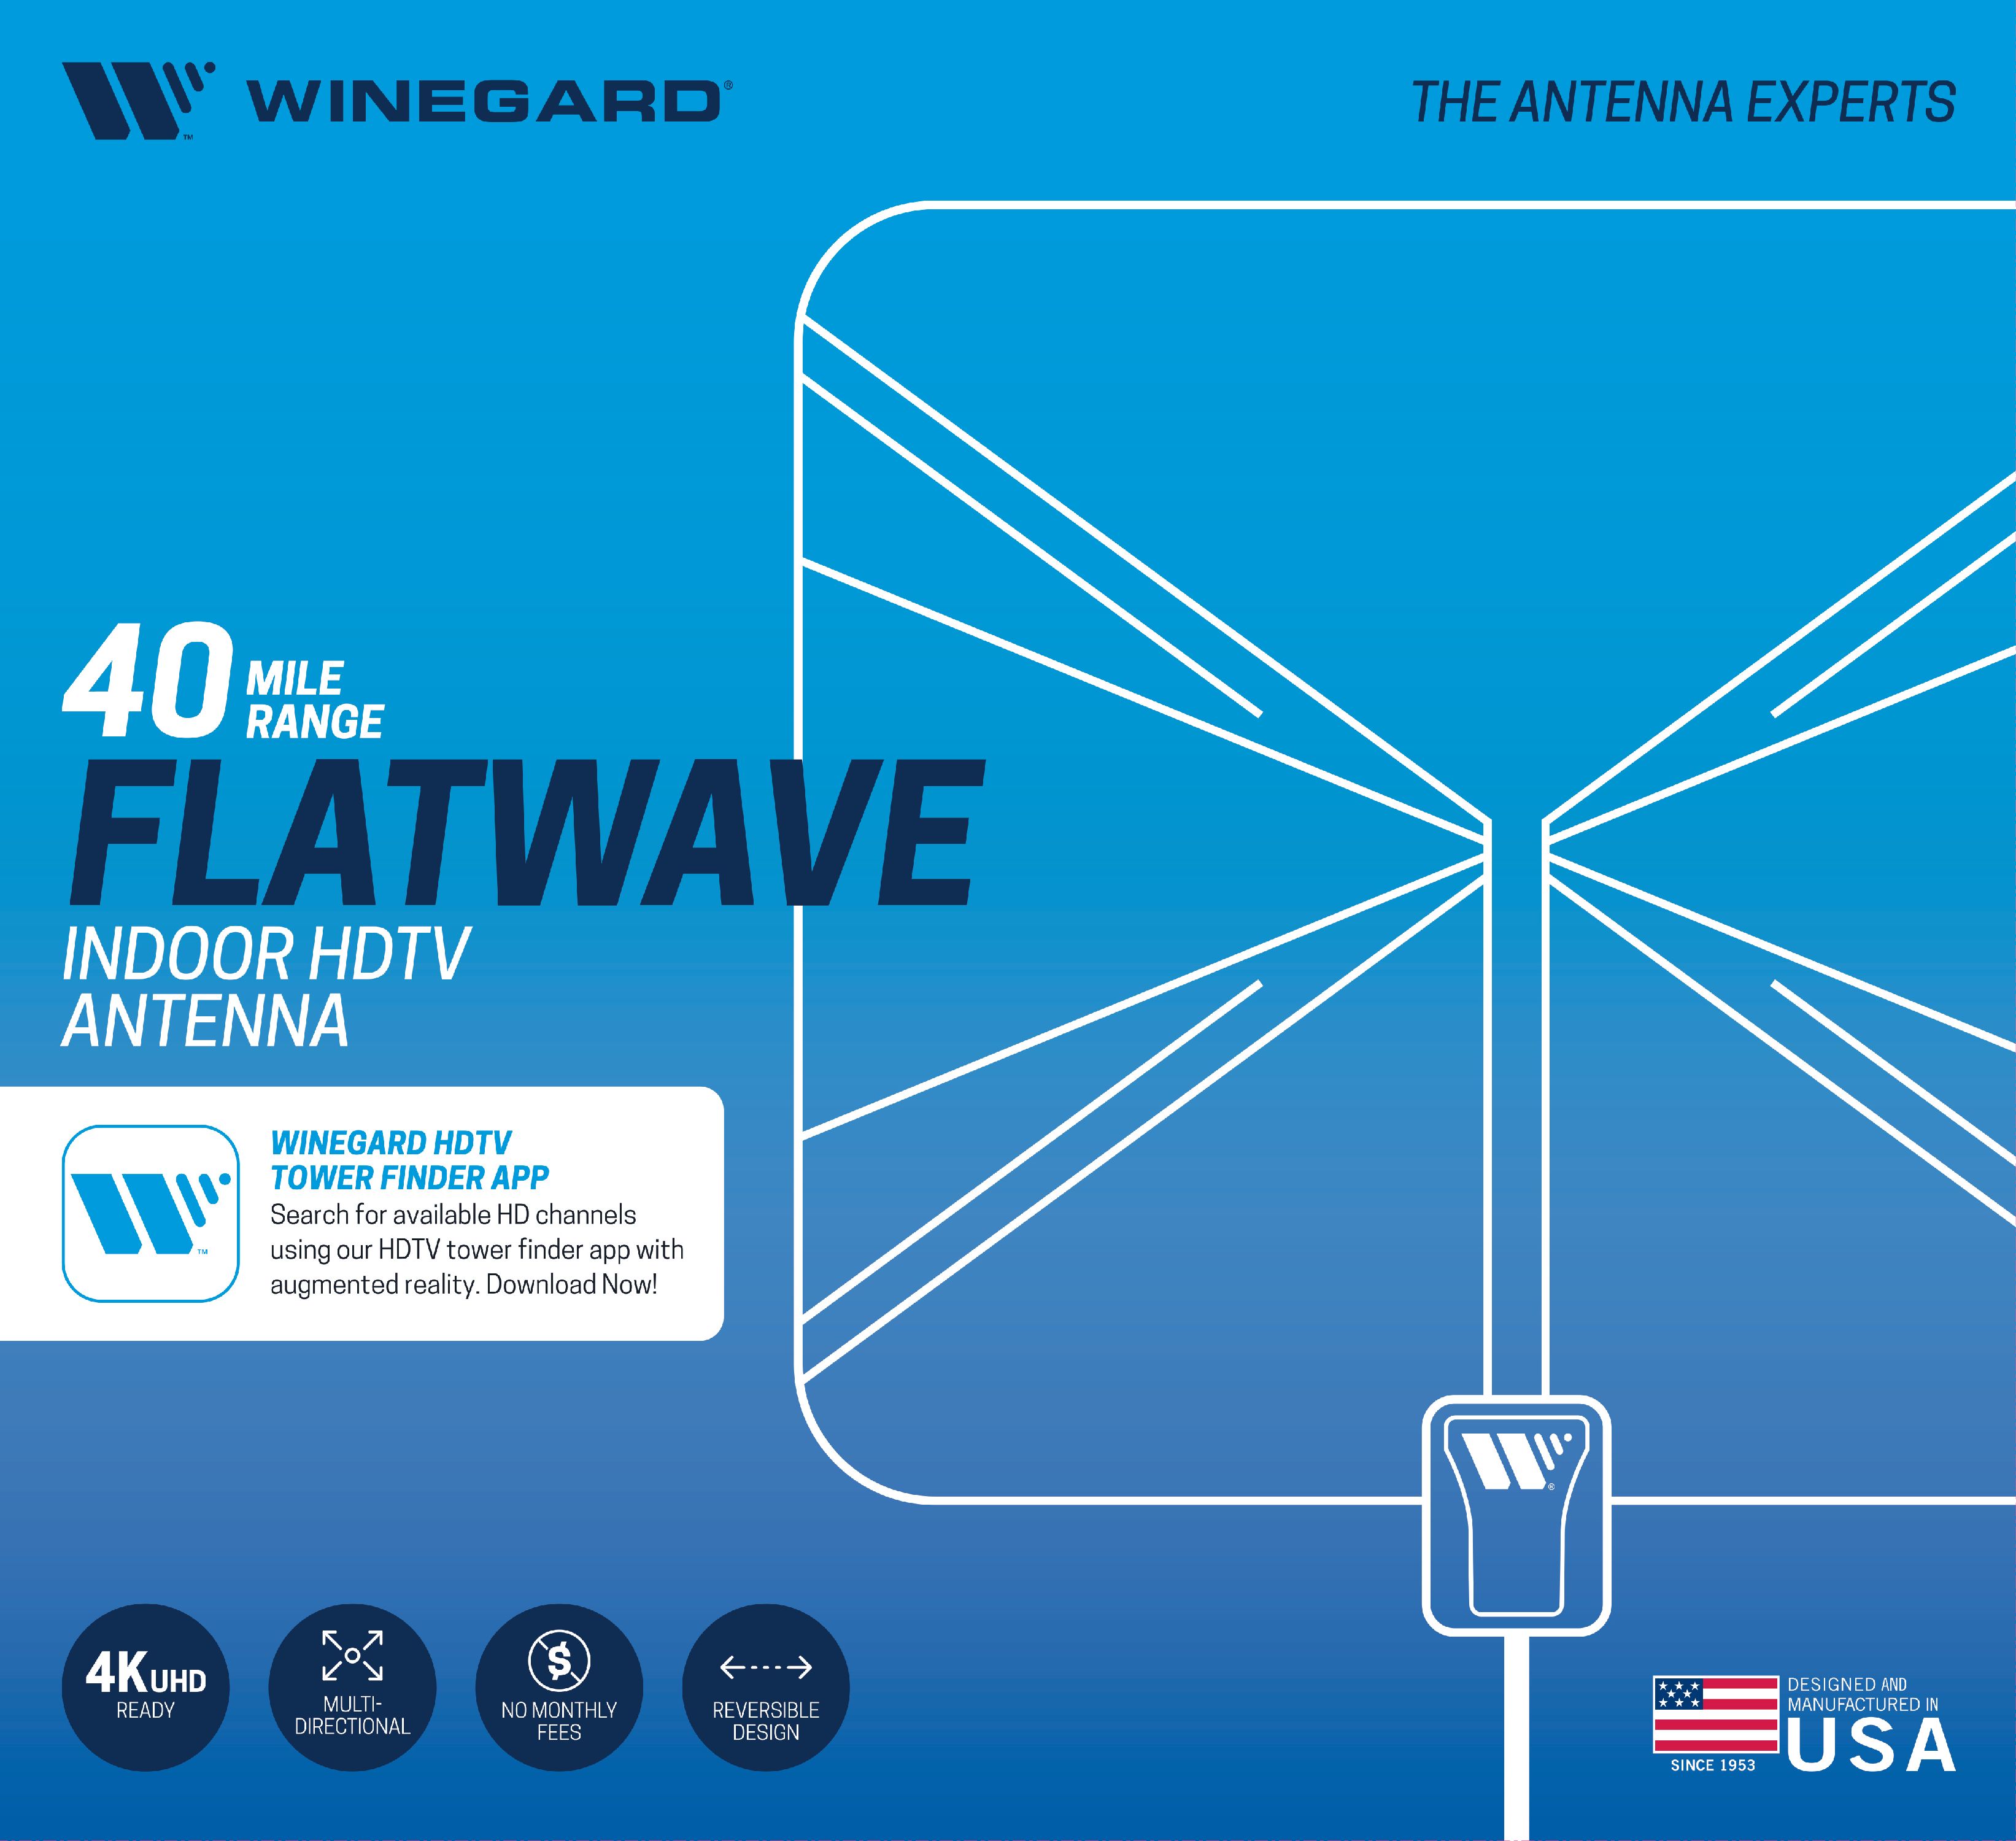 Winegard FL5000 FlatWave HDTV Indoor Flat Antenna - image 1 of 1